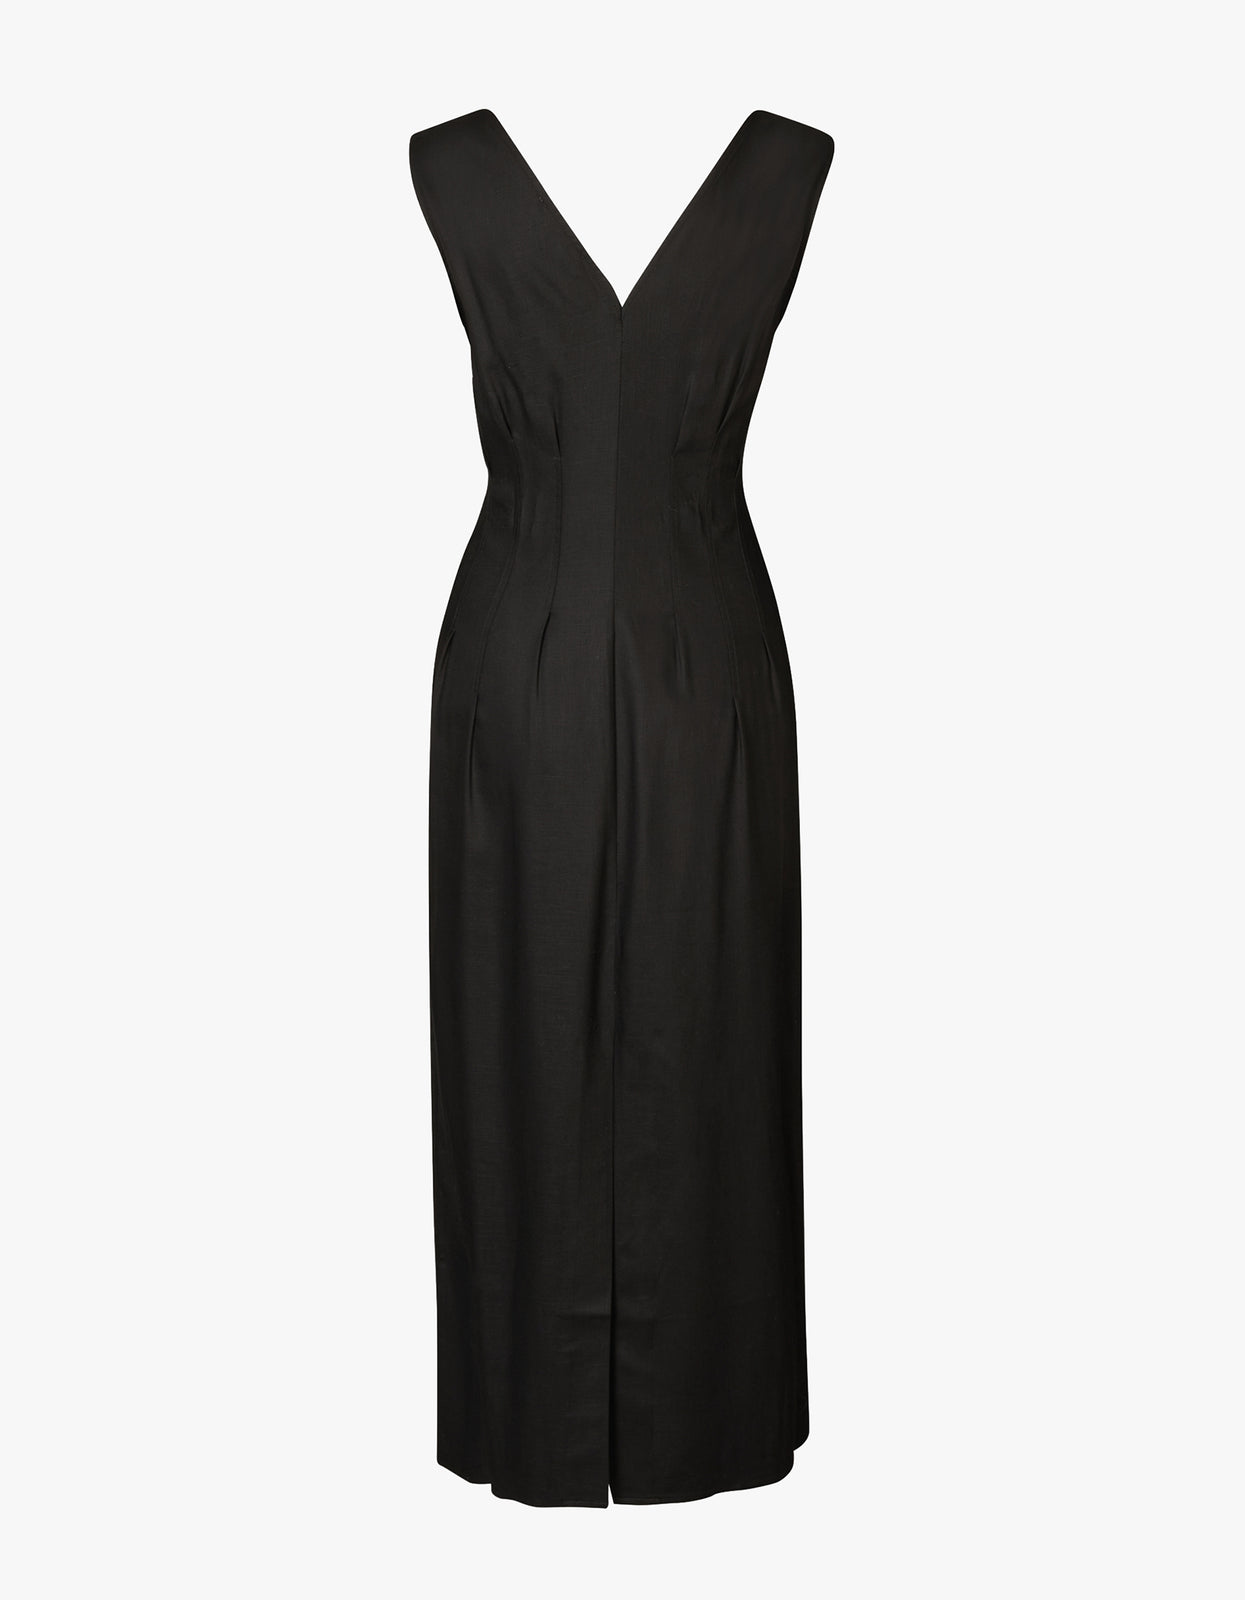 Superette | Salaura Dress 15156 - Black